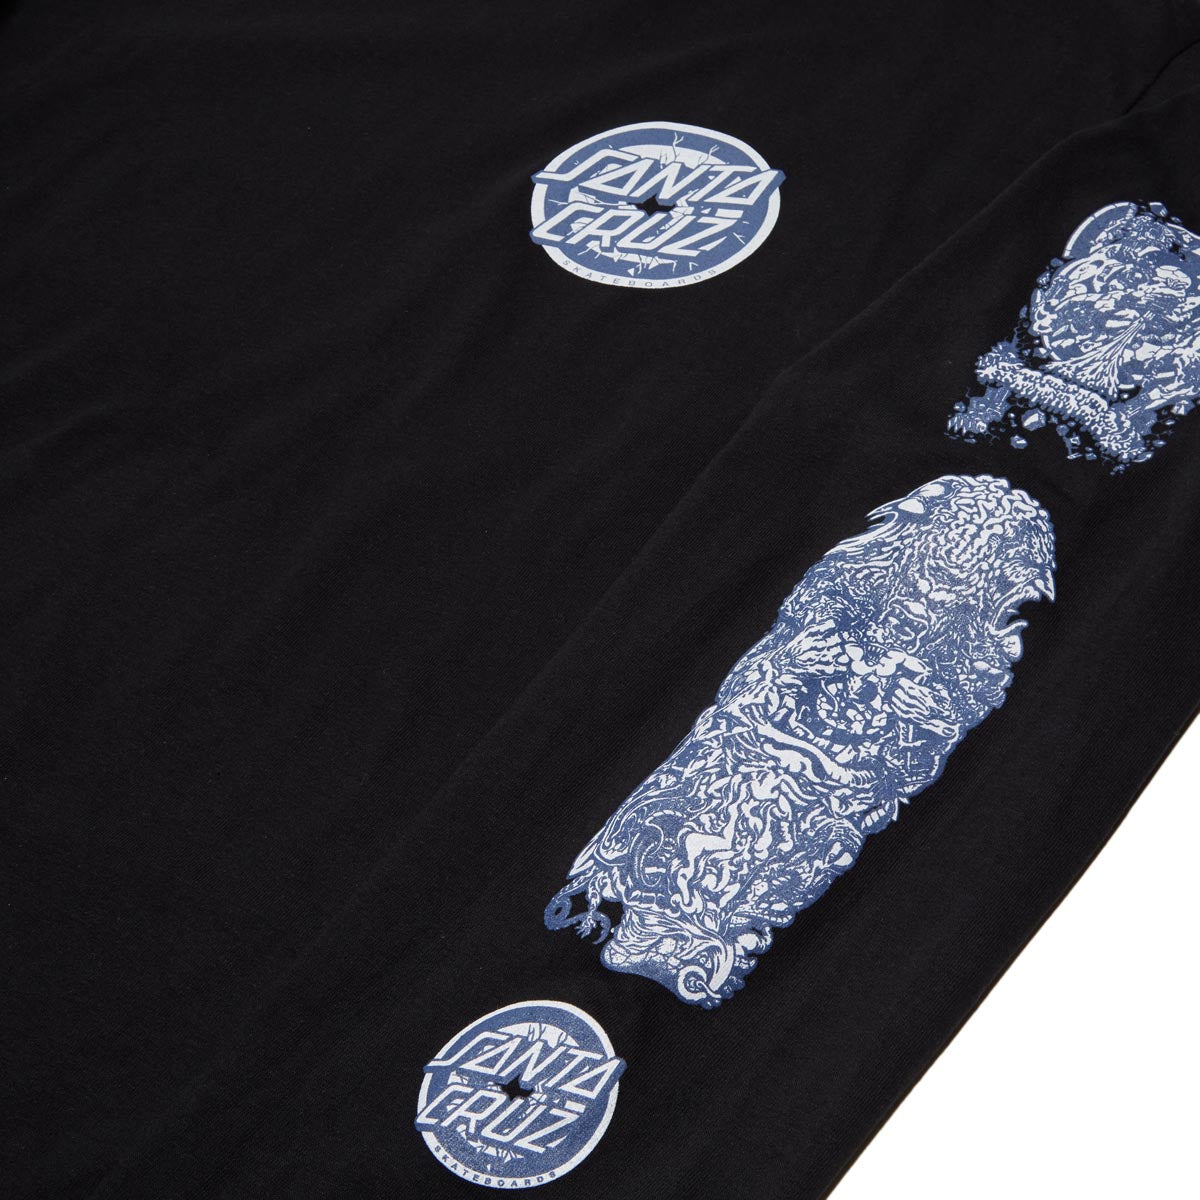 Santa Cruz Rob Evolution Long Sleeve T-Shirt - Black/Blue image 4